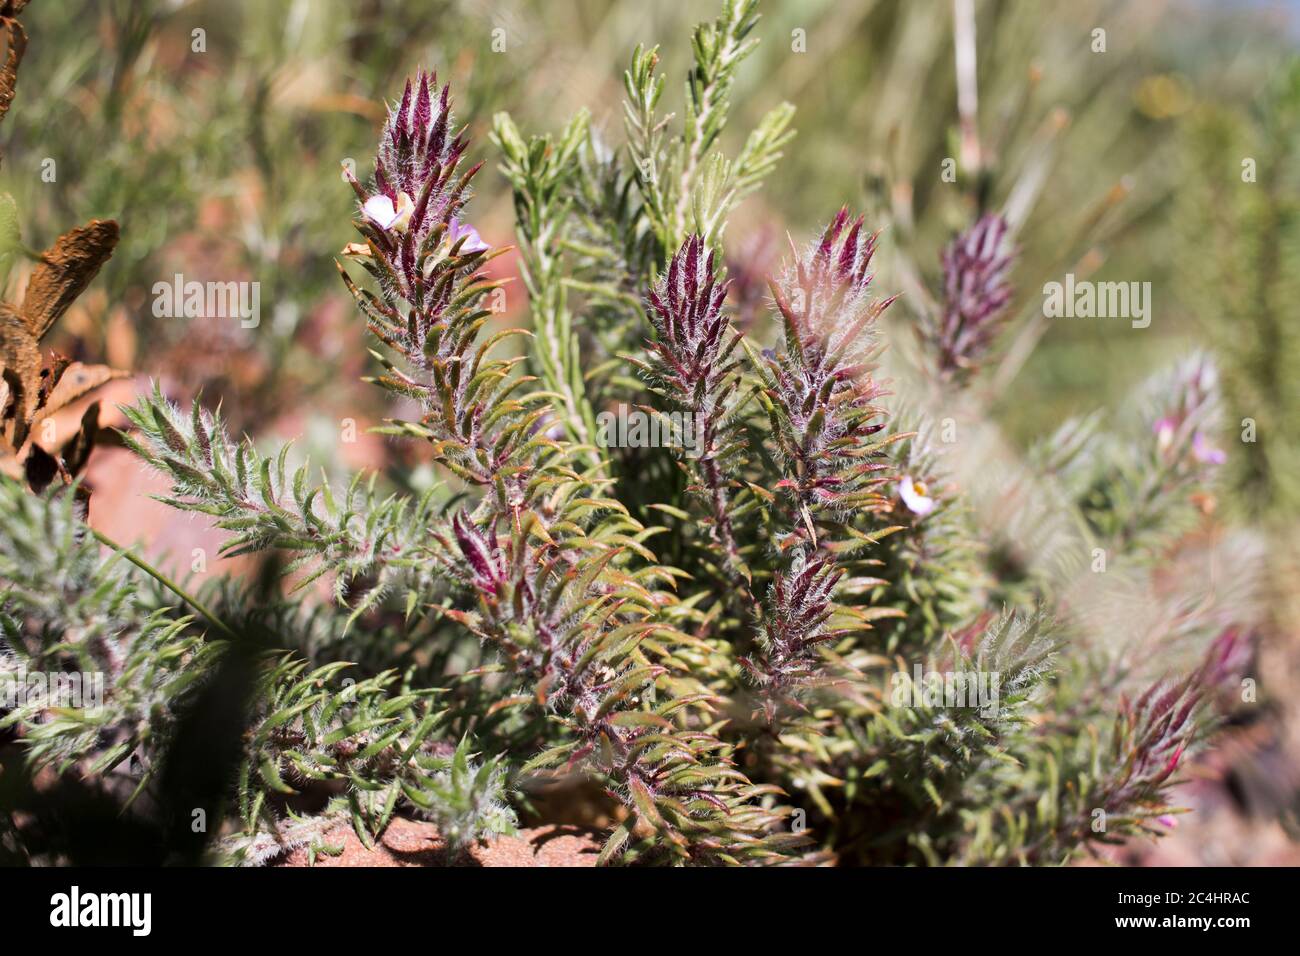 Dettagli di una pianta di fynbos di isteria di Muraltia con foglie pelose Foto Stock